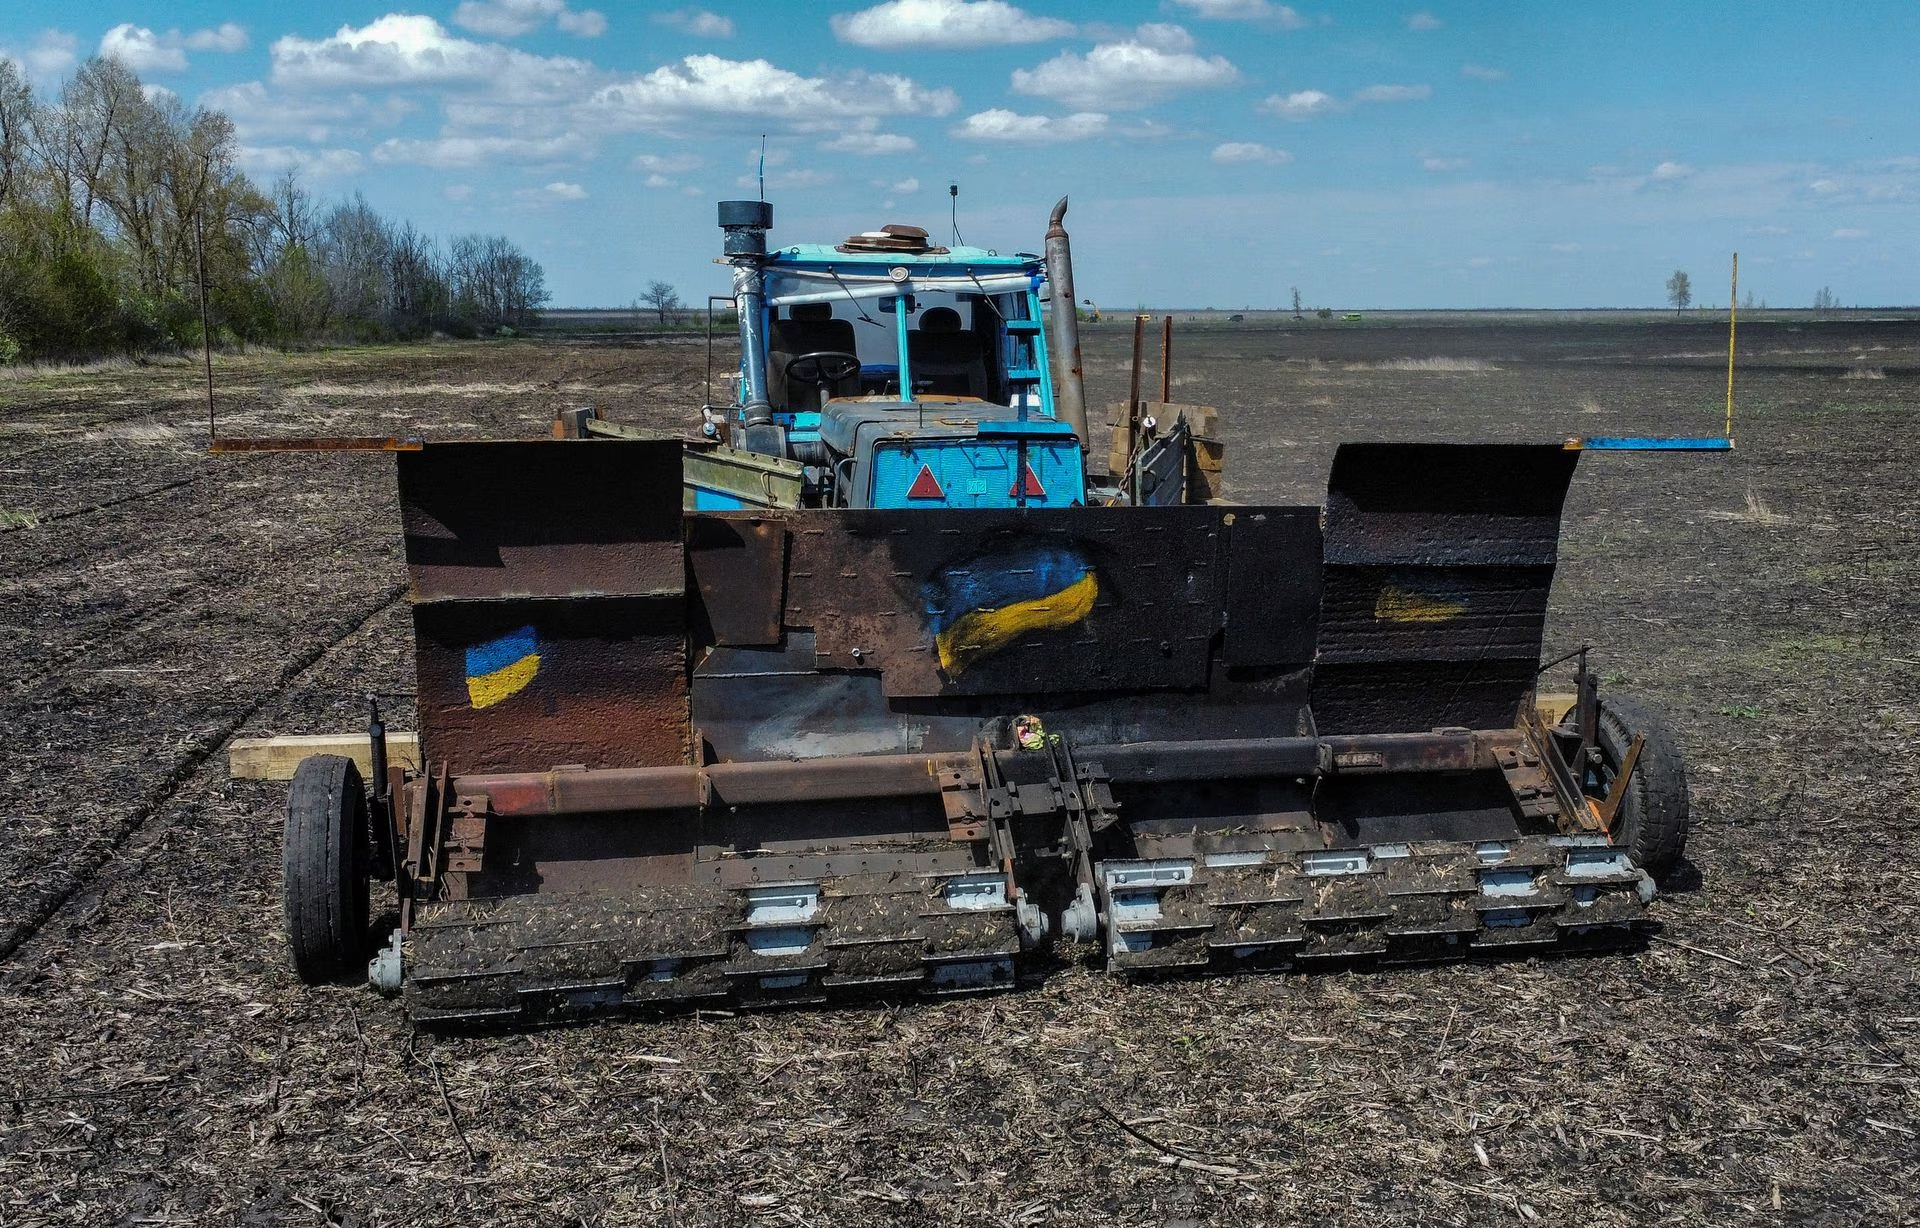 Tρακτέρ drone! Ουκρανός αγρότης βρήκε τρόπο να αποναρκοθετήσει τα χωράφια του (video)